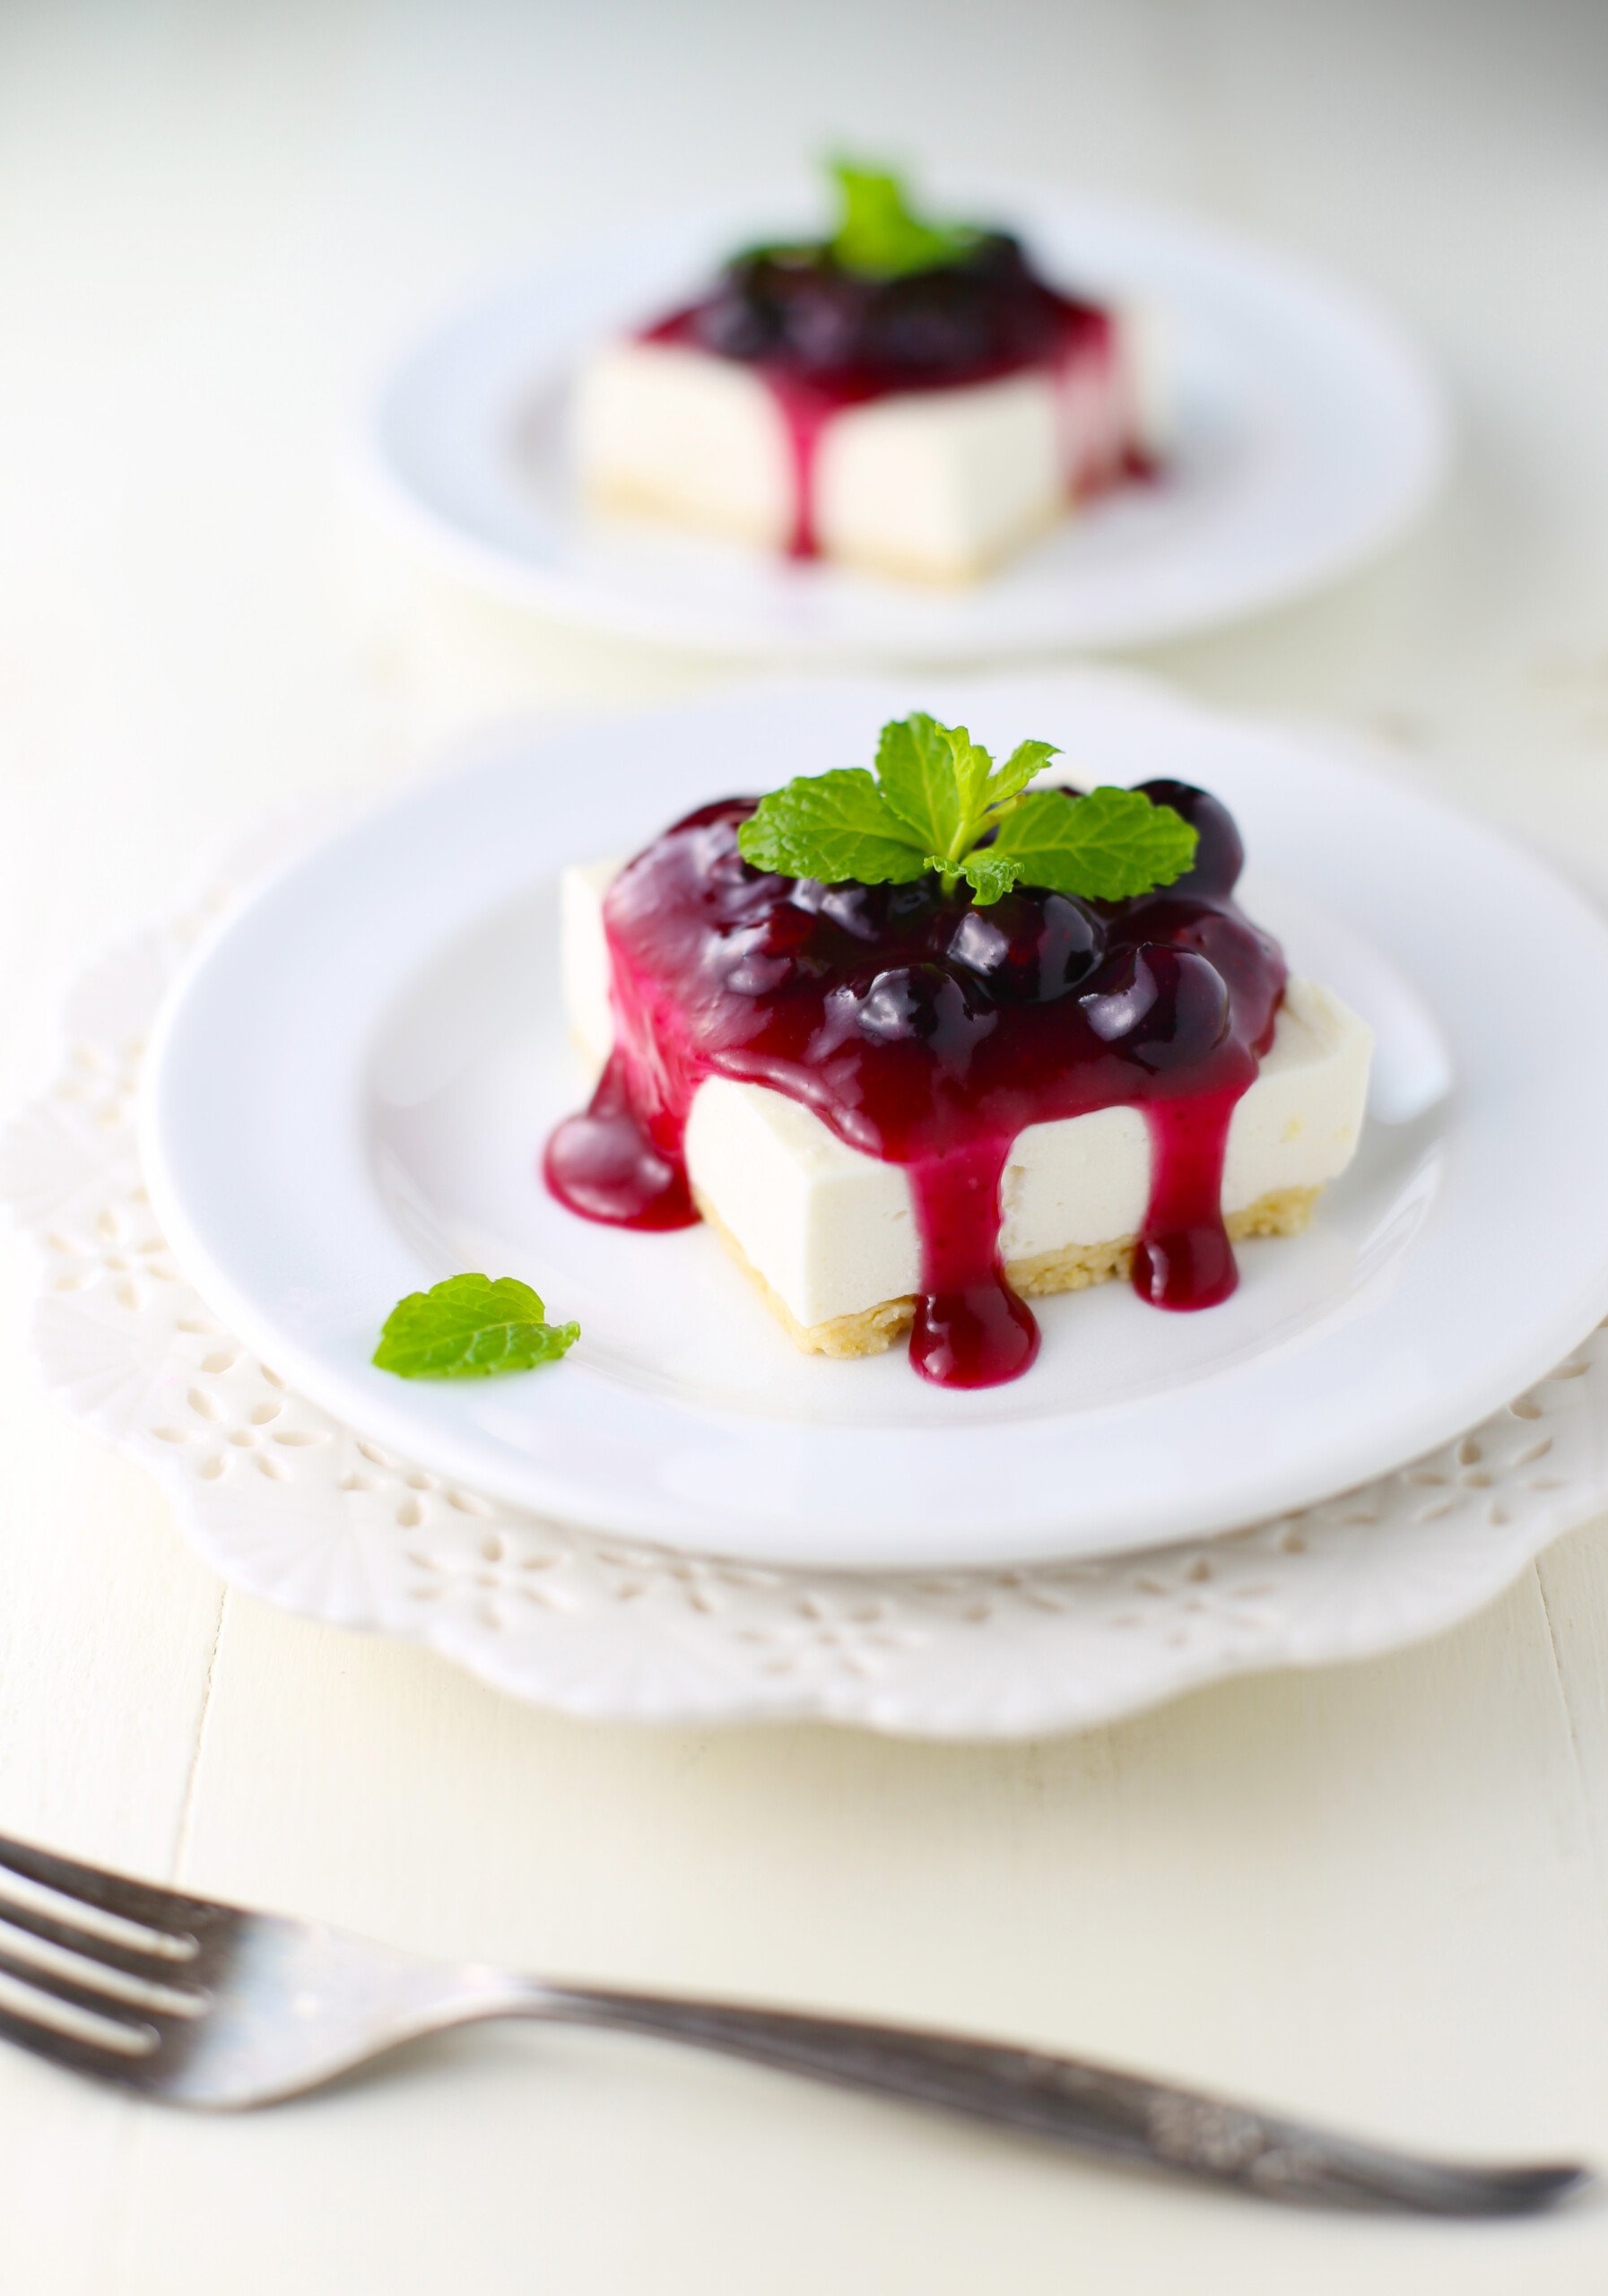 Blueberry cheesecake bars on white plates.